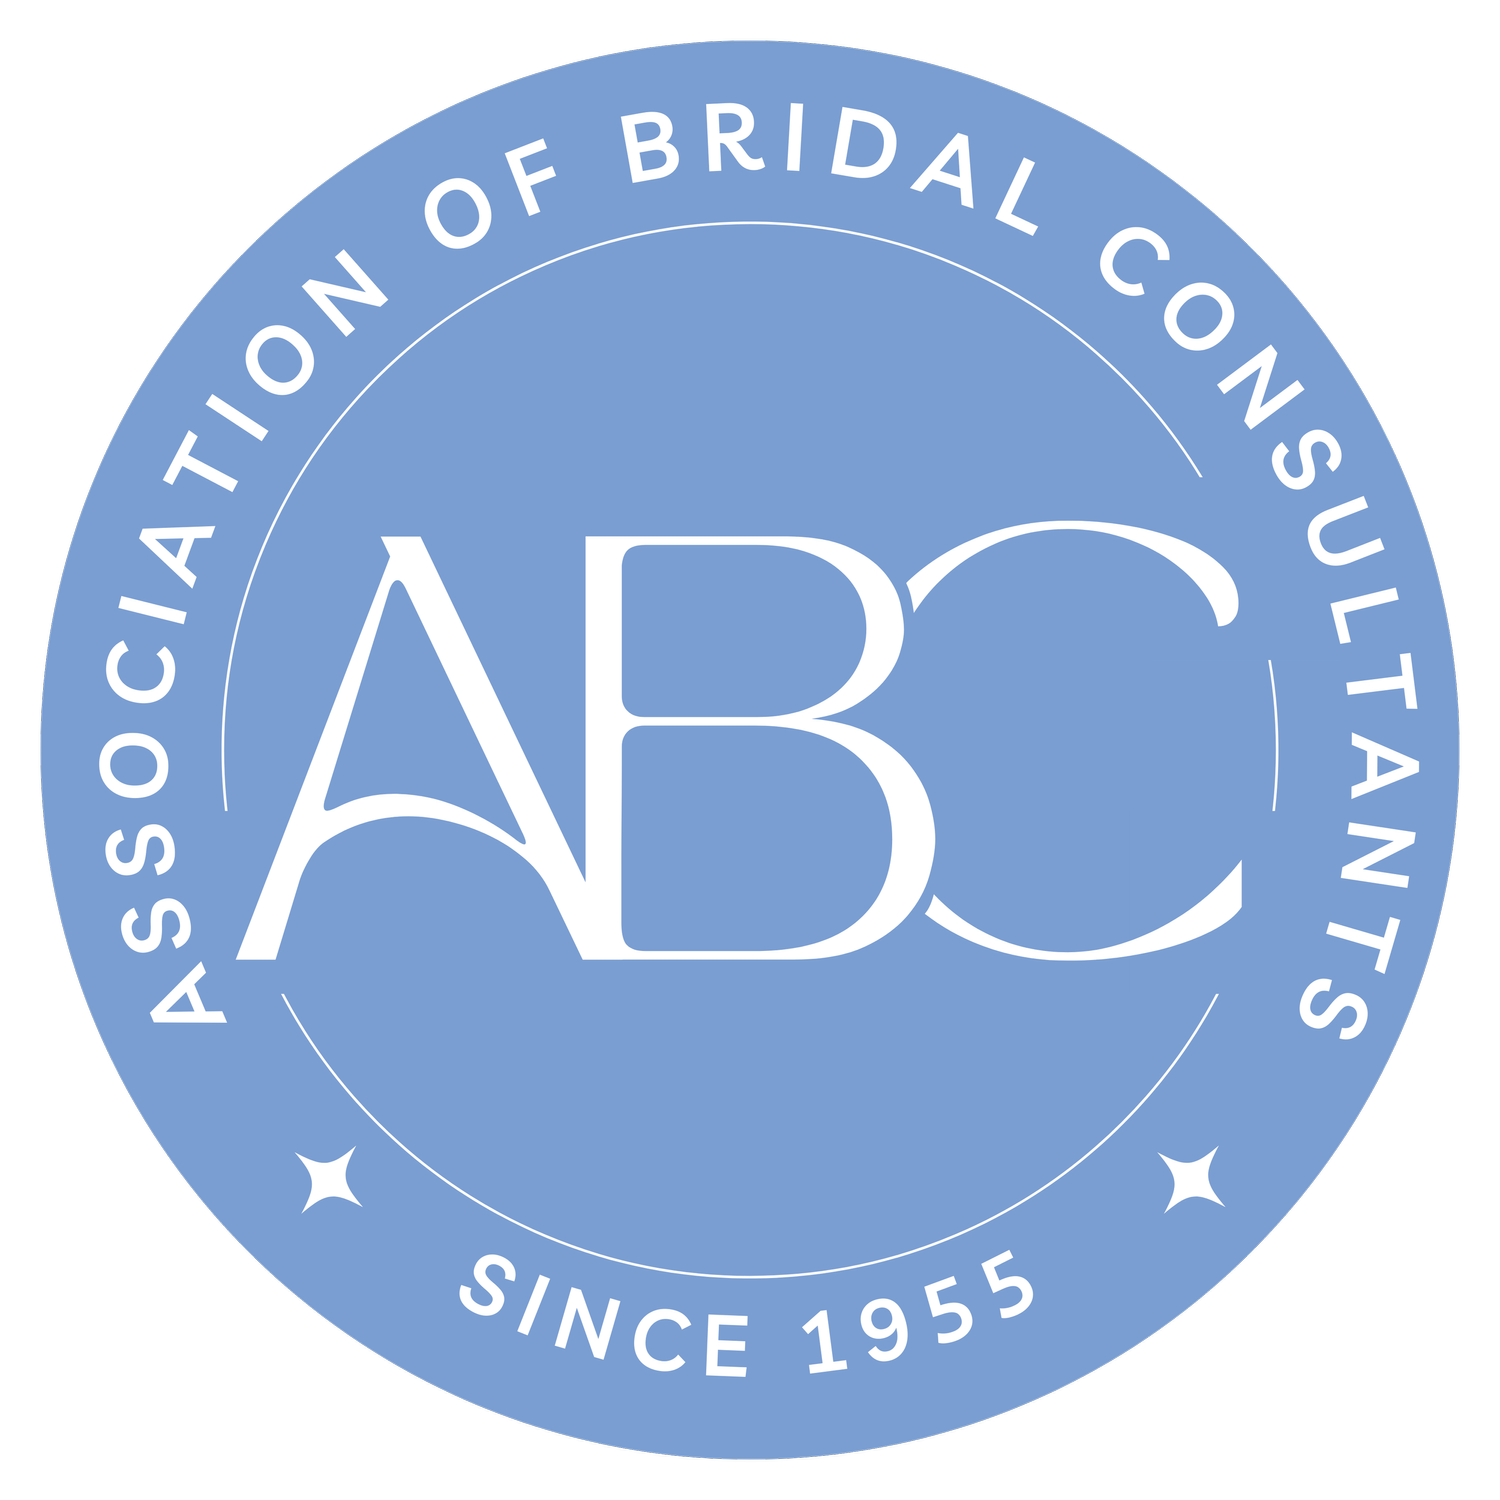 Association of Bridal Consultants